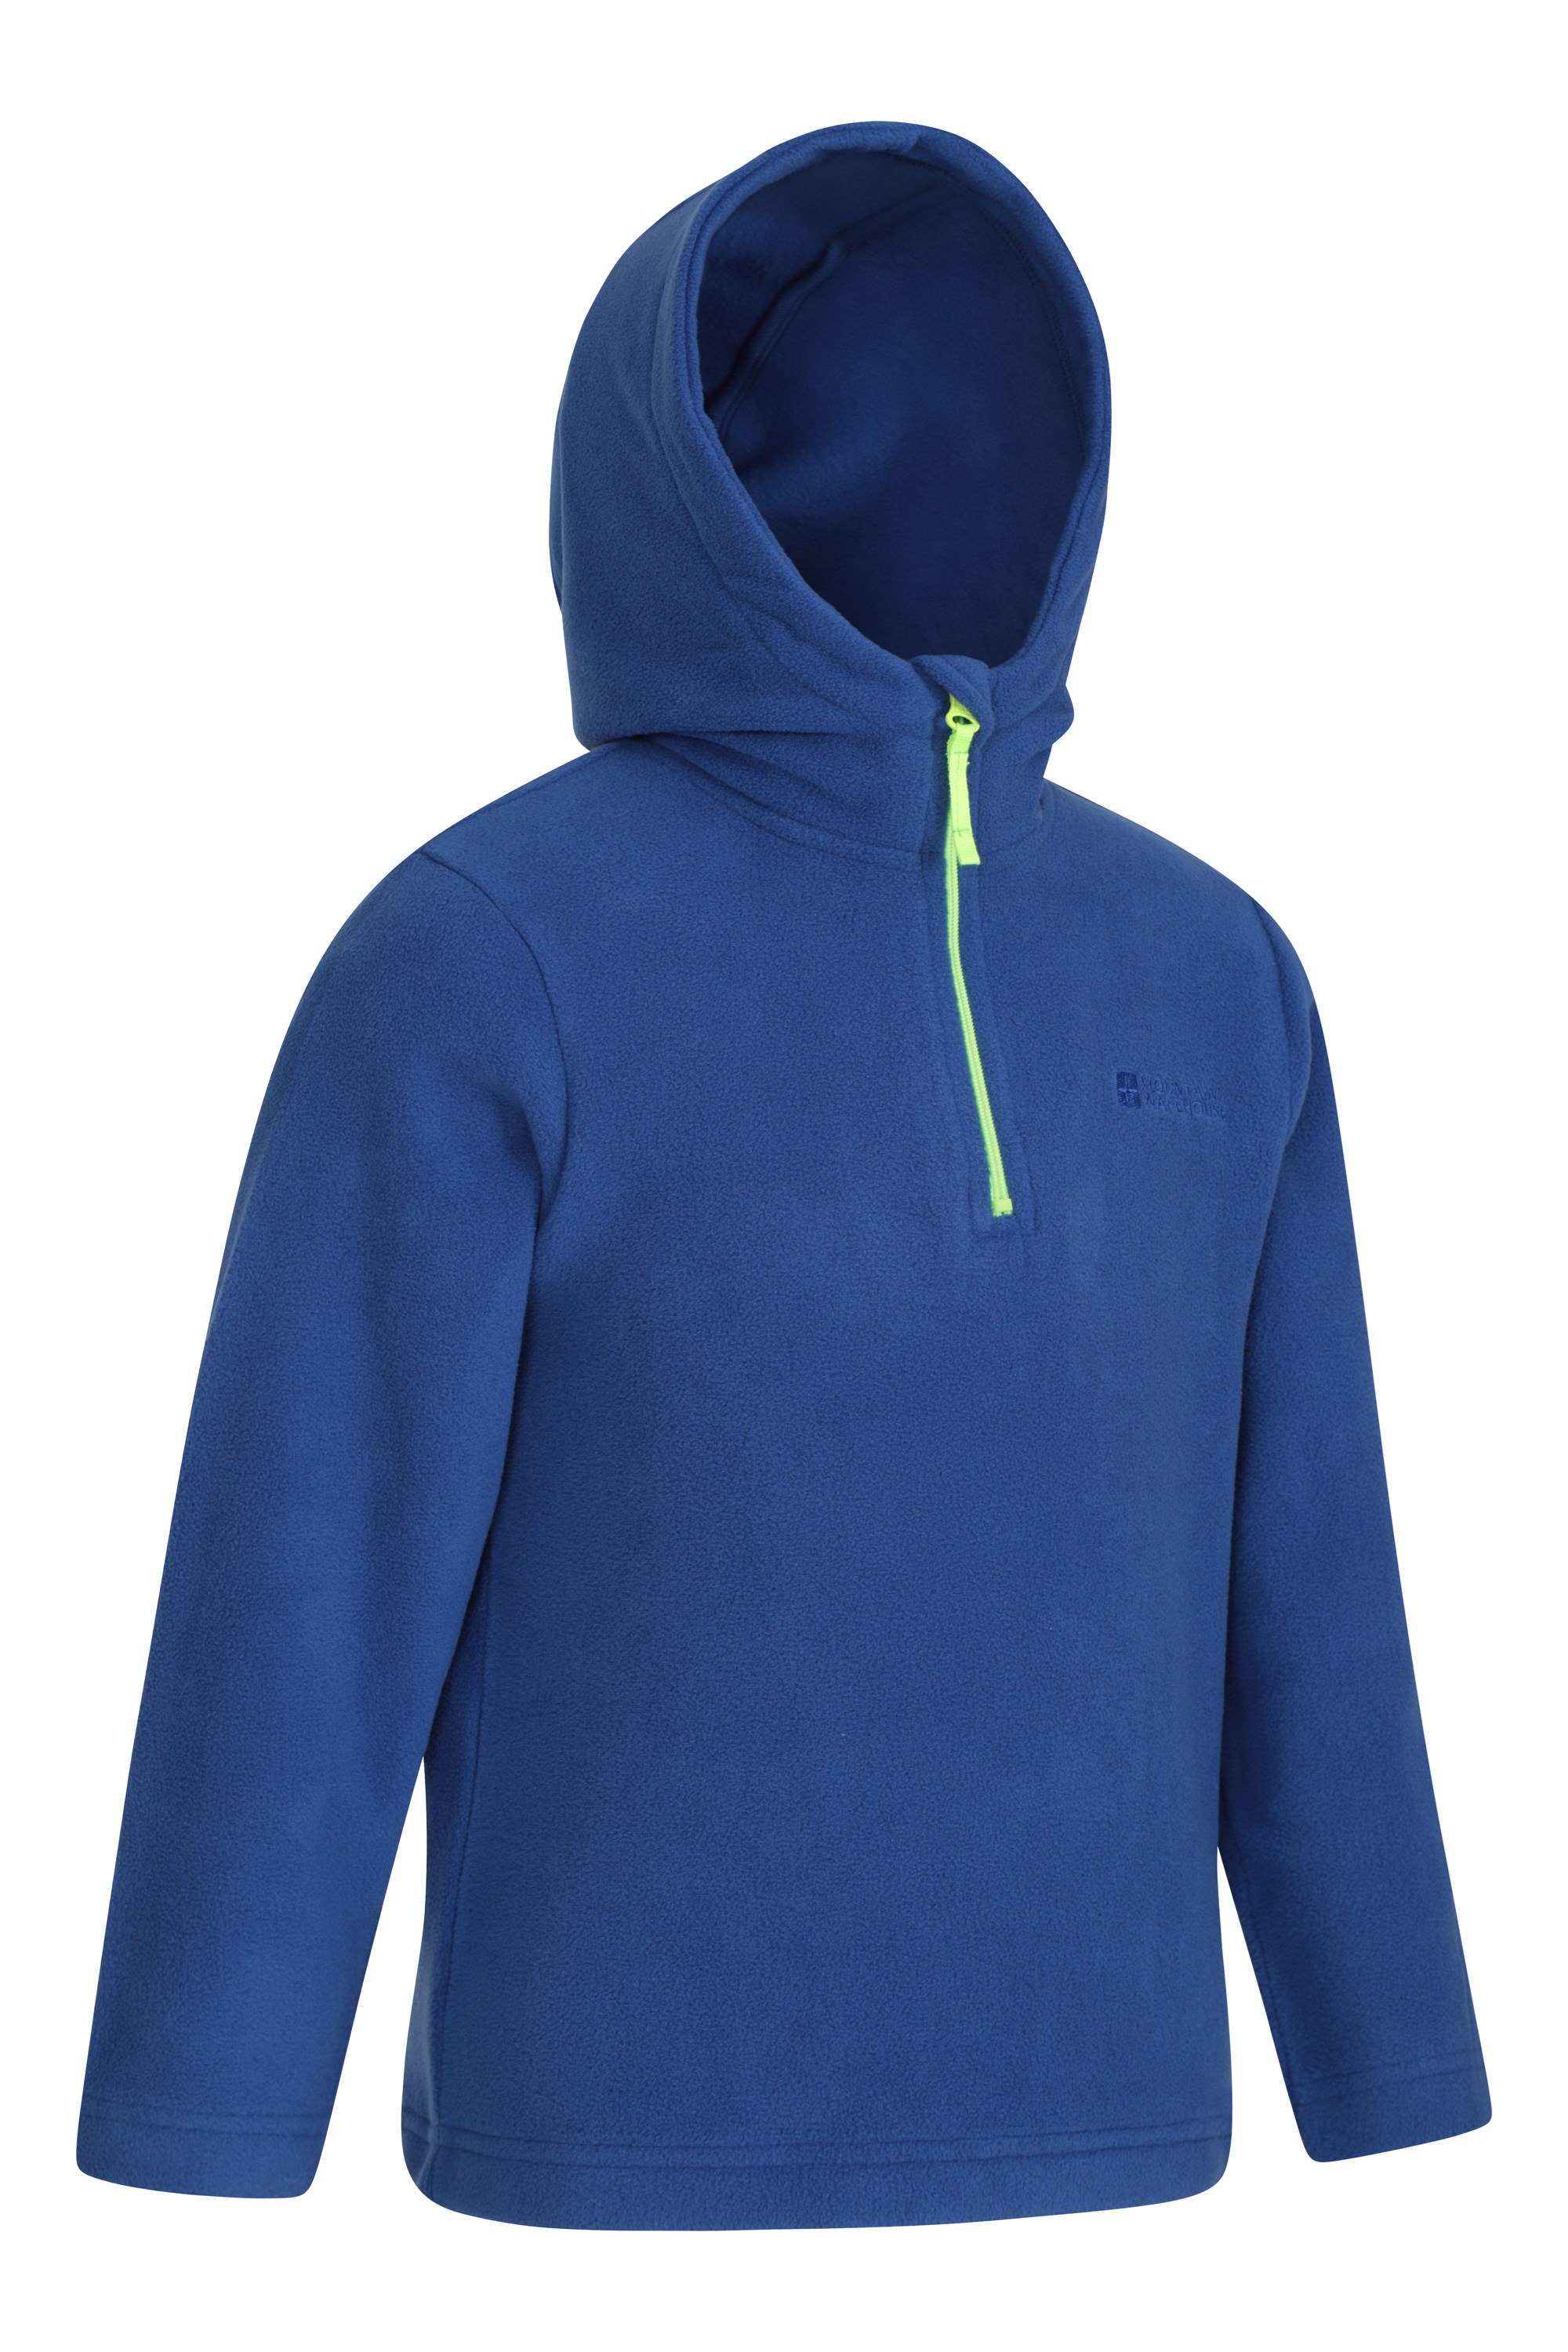 Mountain Warehouse Baby Camber Fleece Jacket Quick Drying lightweight Warm & Cosy Microfleece 